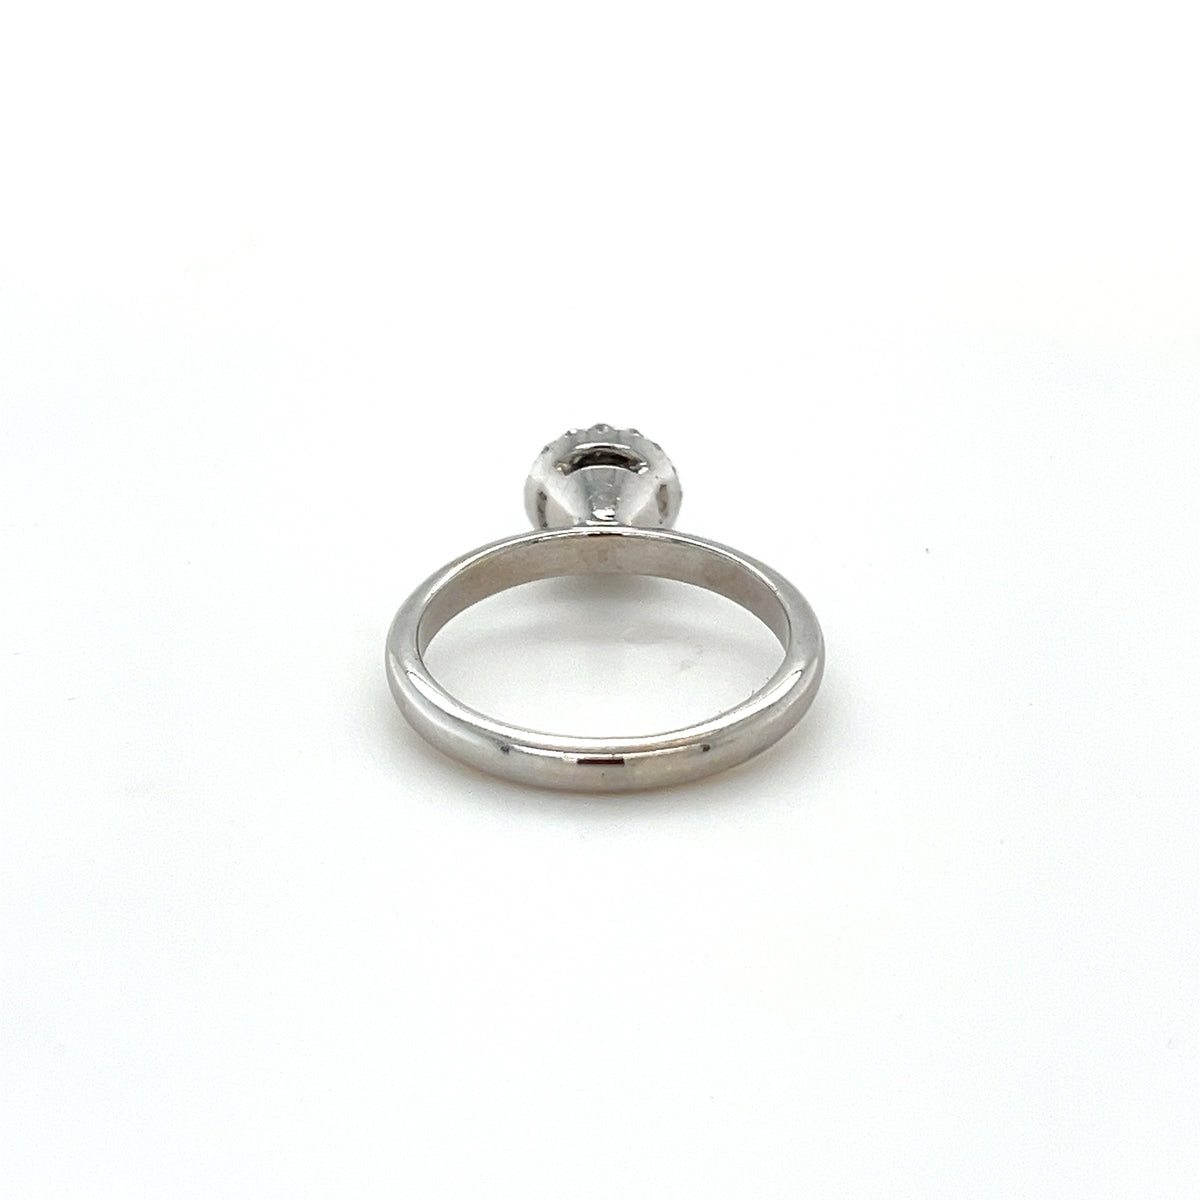 Colori Ring in 18k White Gold with White Topaz and Diamonds - Orsini Jewellers